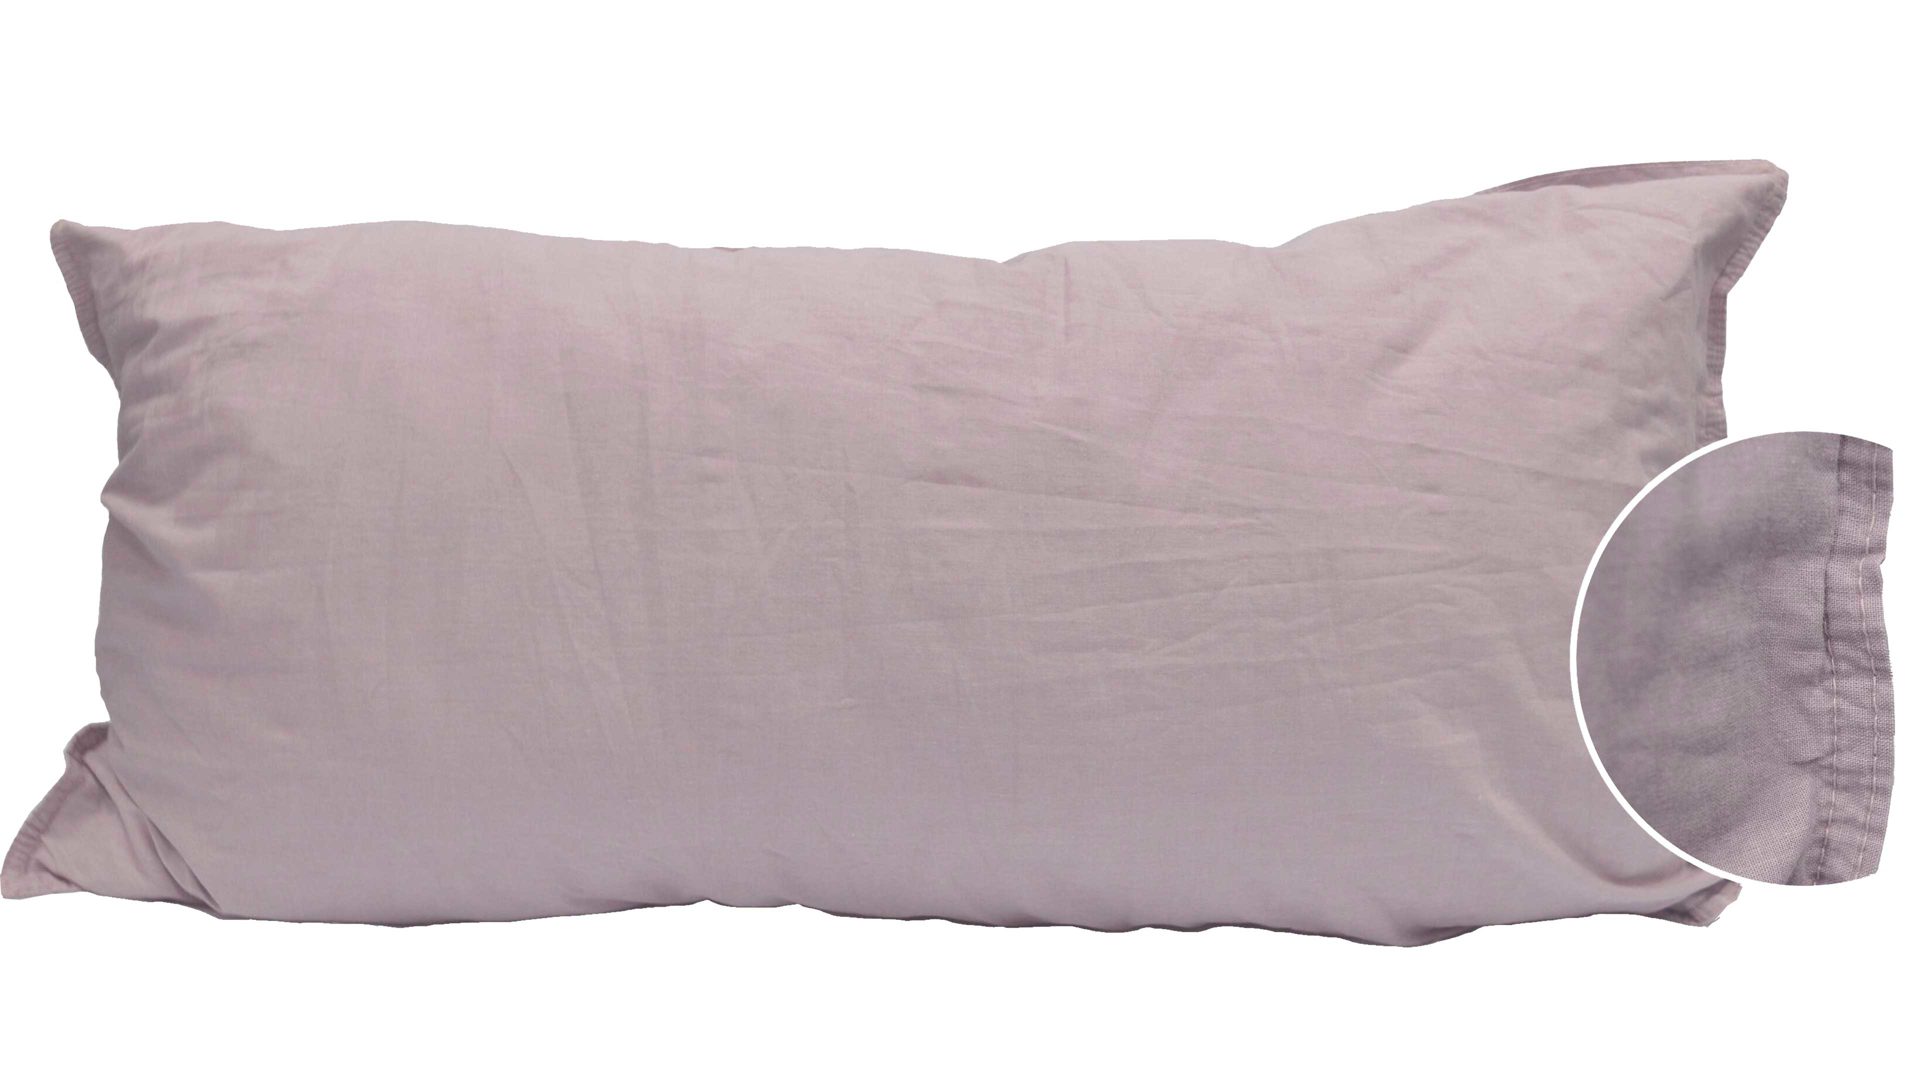 Kissenbezug /-hülle H.g. hahn haustextilien aus Stoff in Rosa HAHN Kissenbezug Stone Washed altrosafarbene Baumwolle – ca. 40 x 80 cm